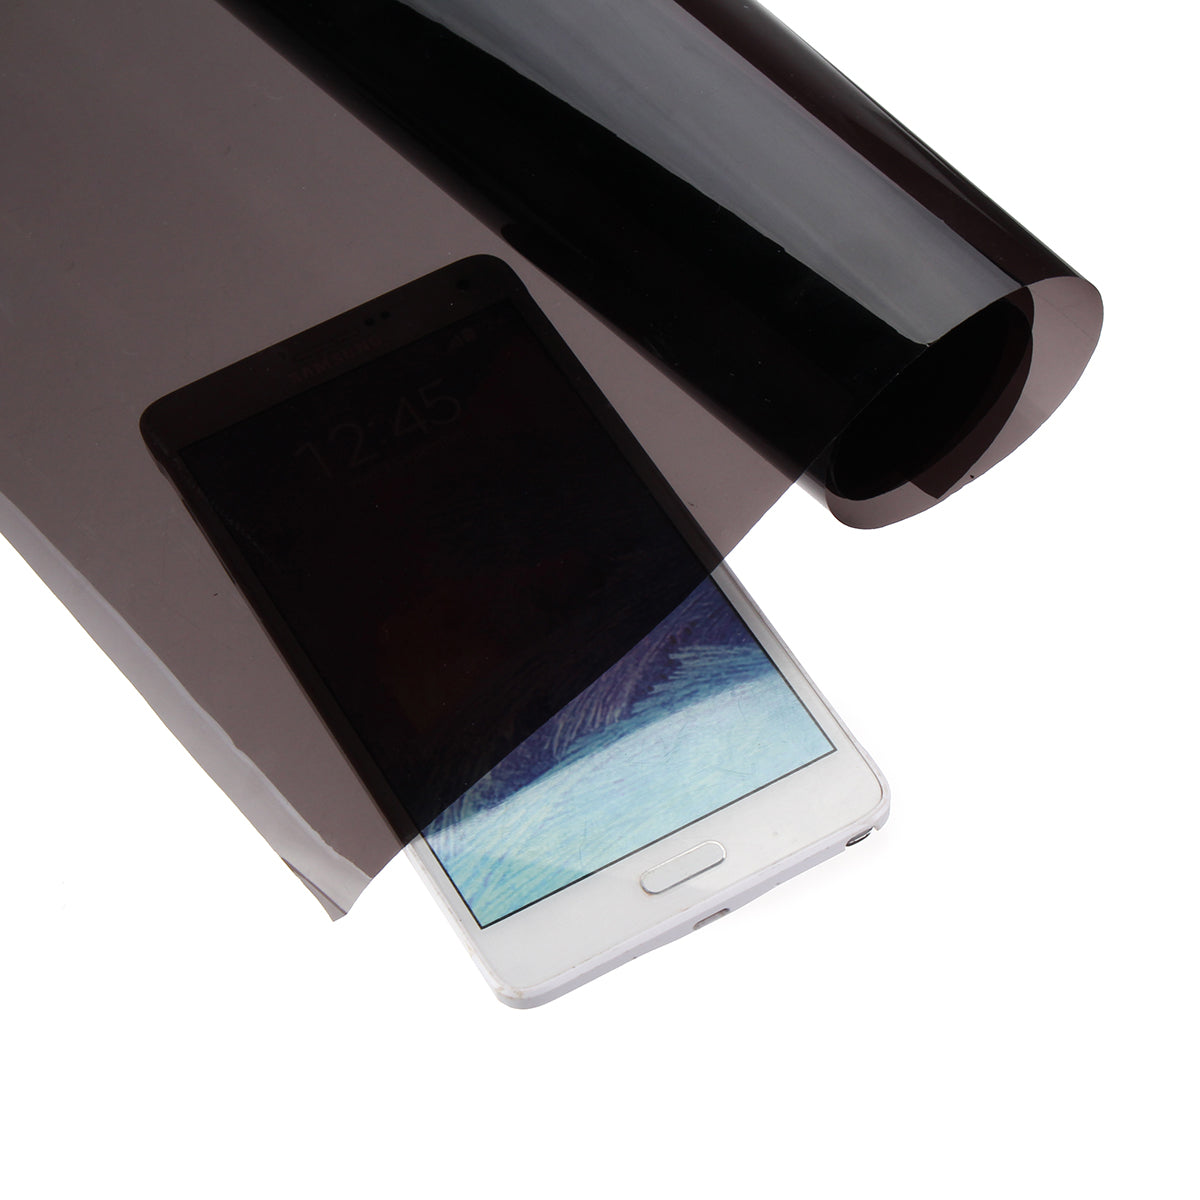 Black 50cmx1m 15% VLT Black Car Glass Window Tint Shade Film Roll for Home Office Boat